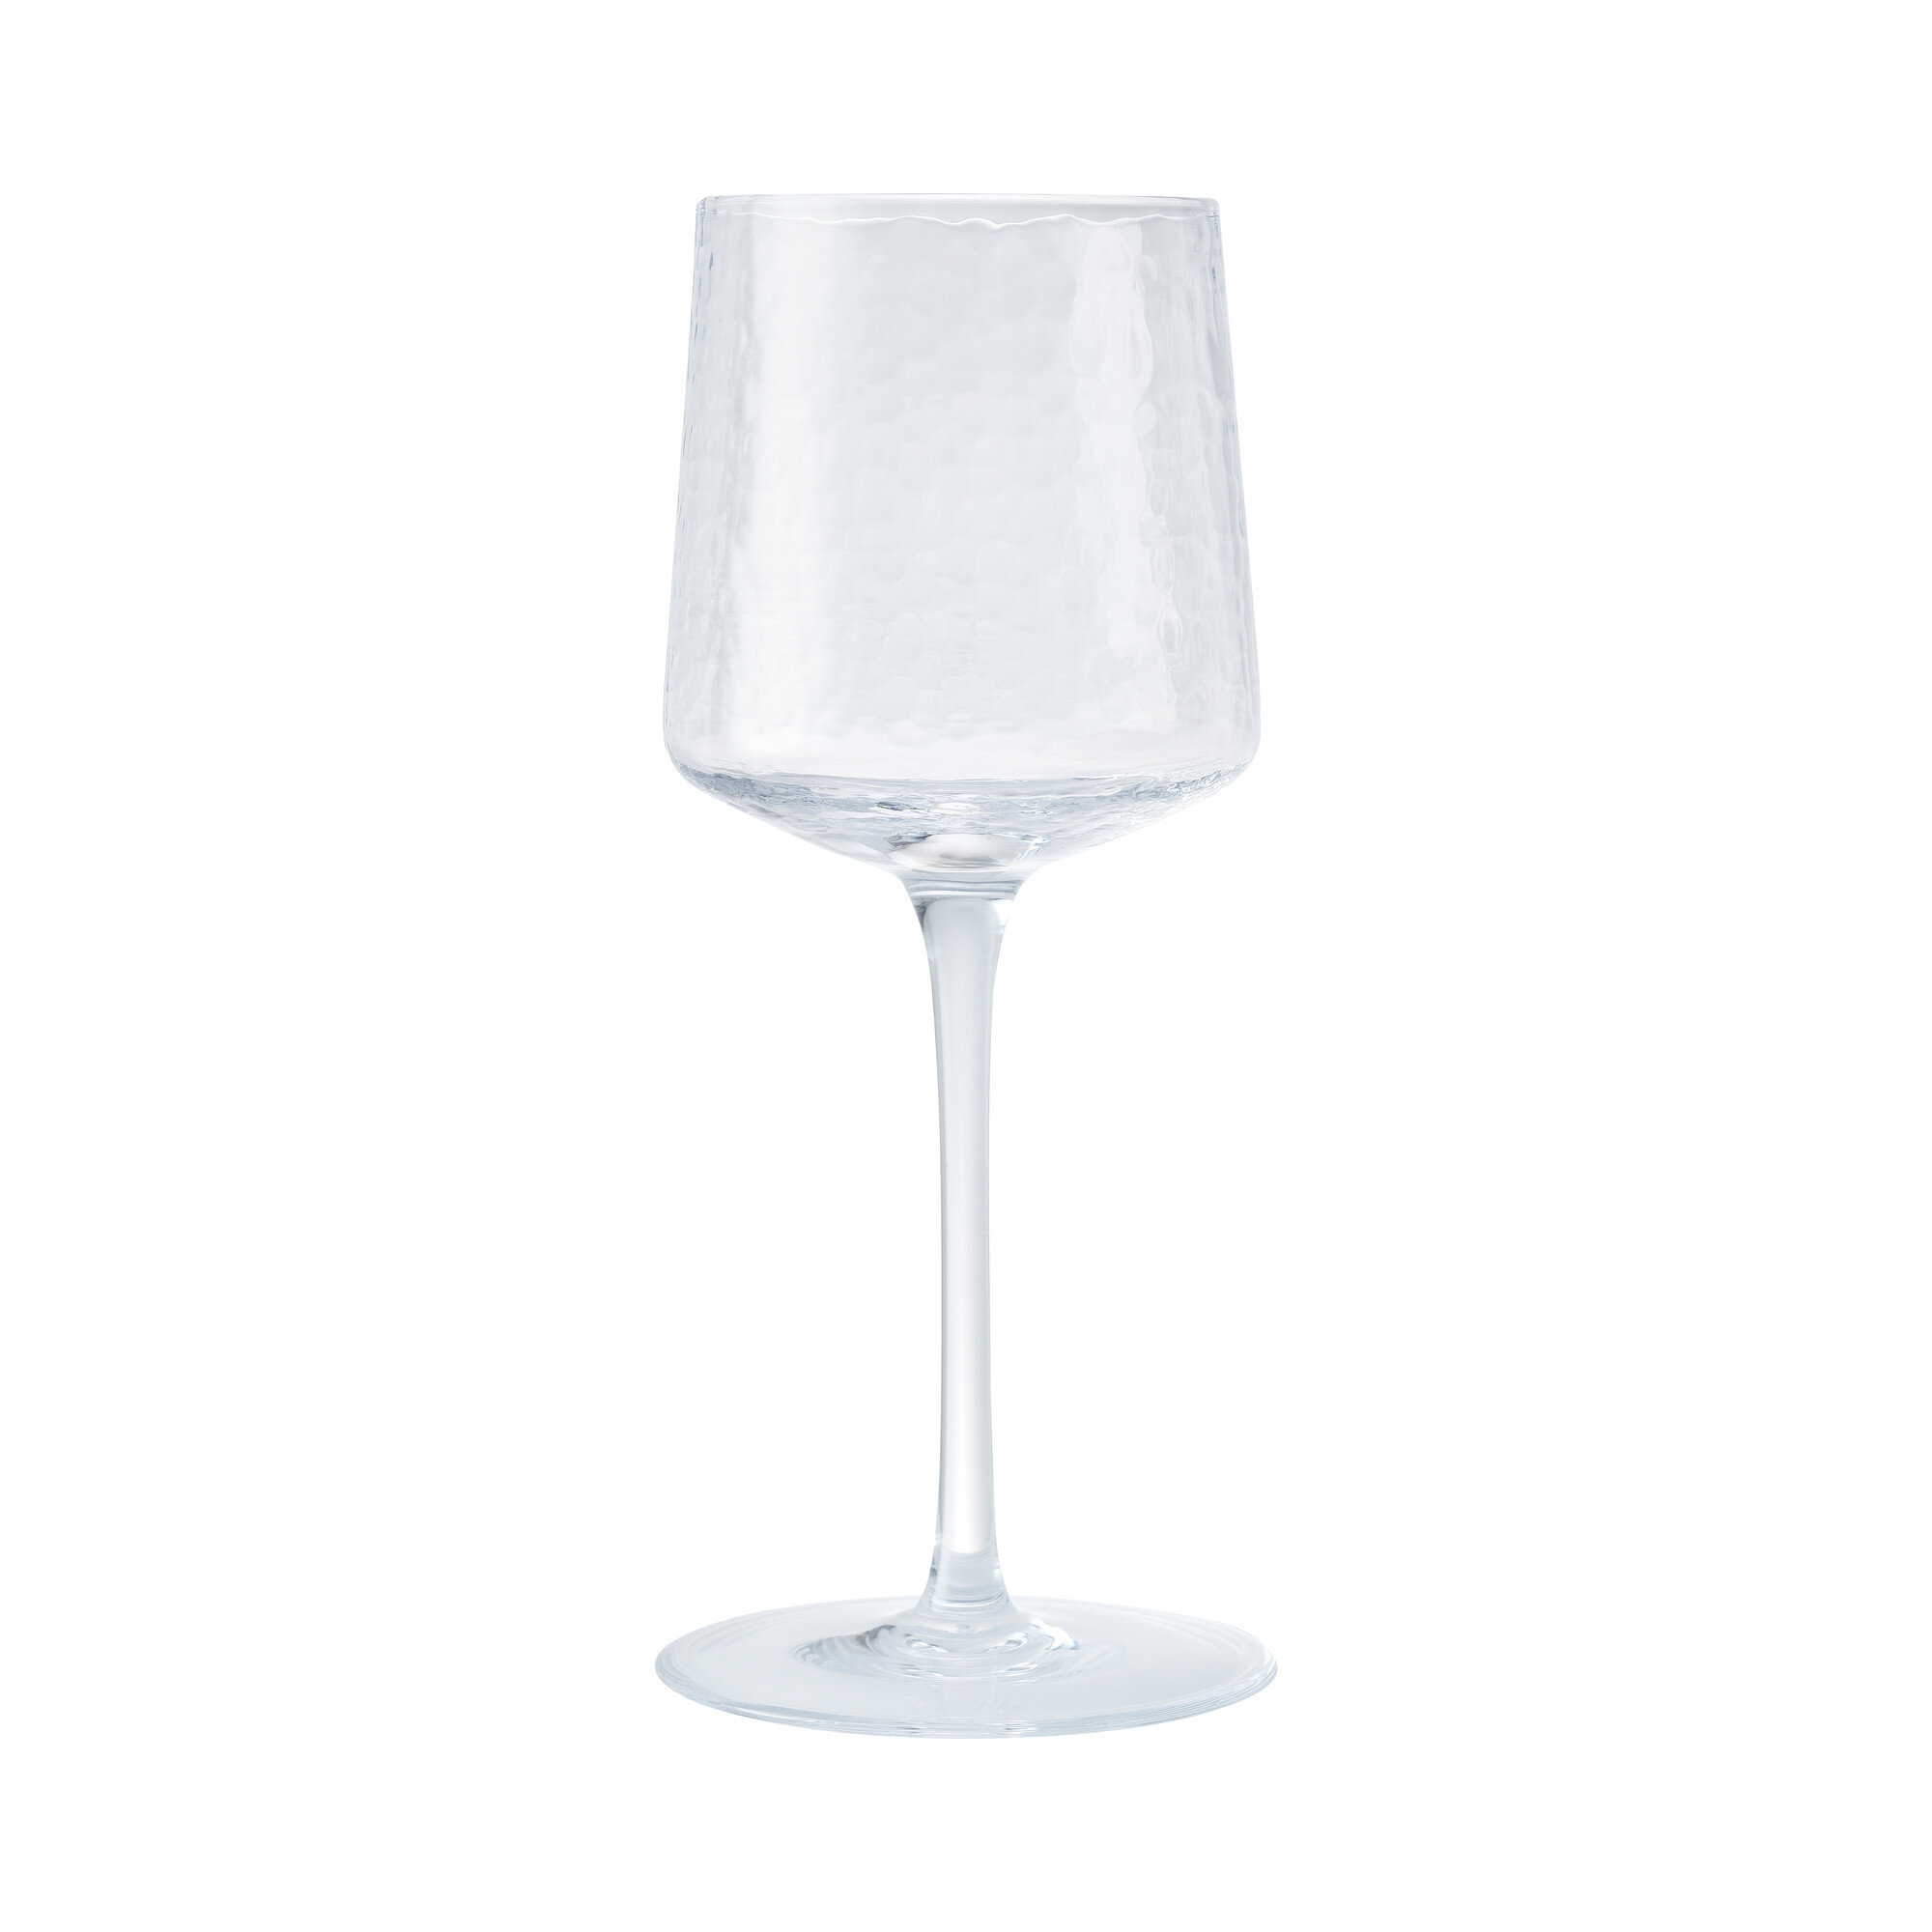 Gunmetal Stemless Wine Glasses by Viski, Set of 2 - Drinkware